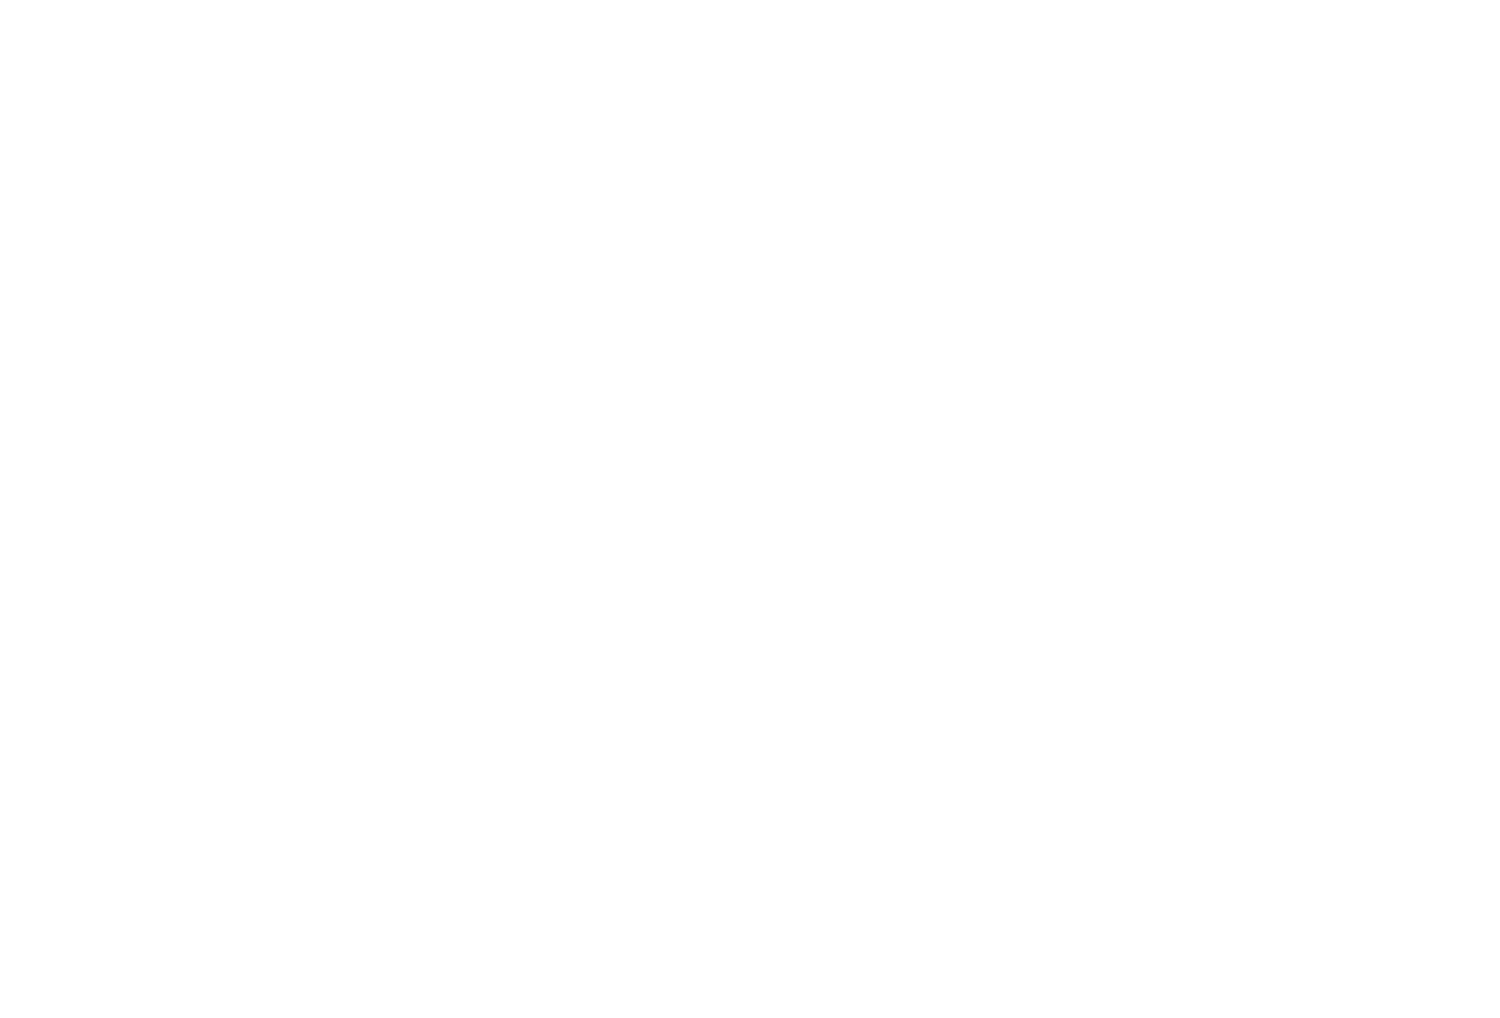 3PONDS Farm